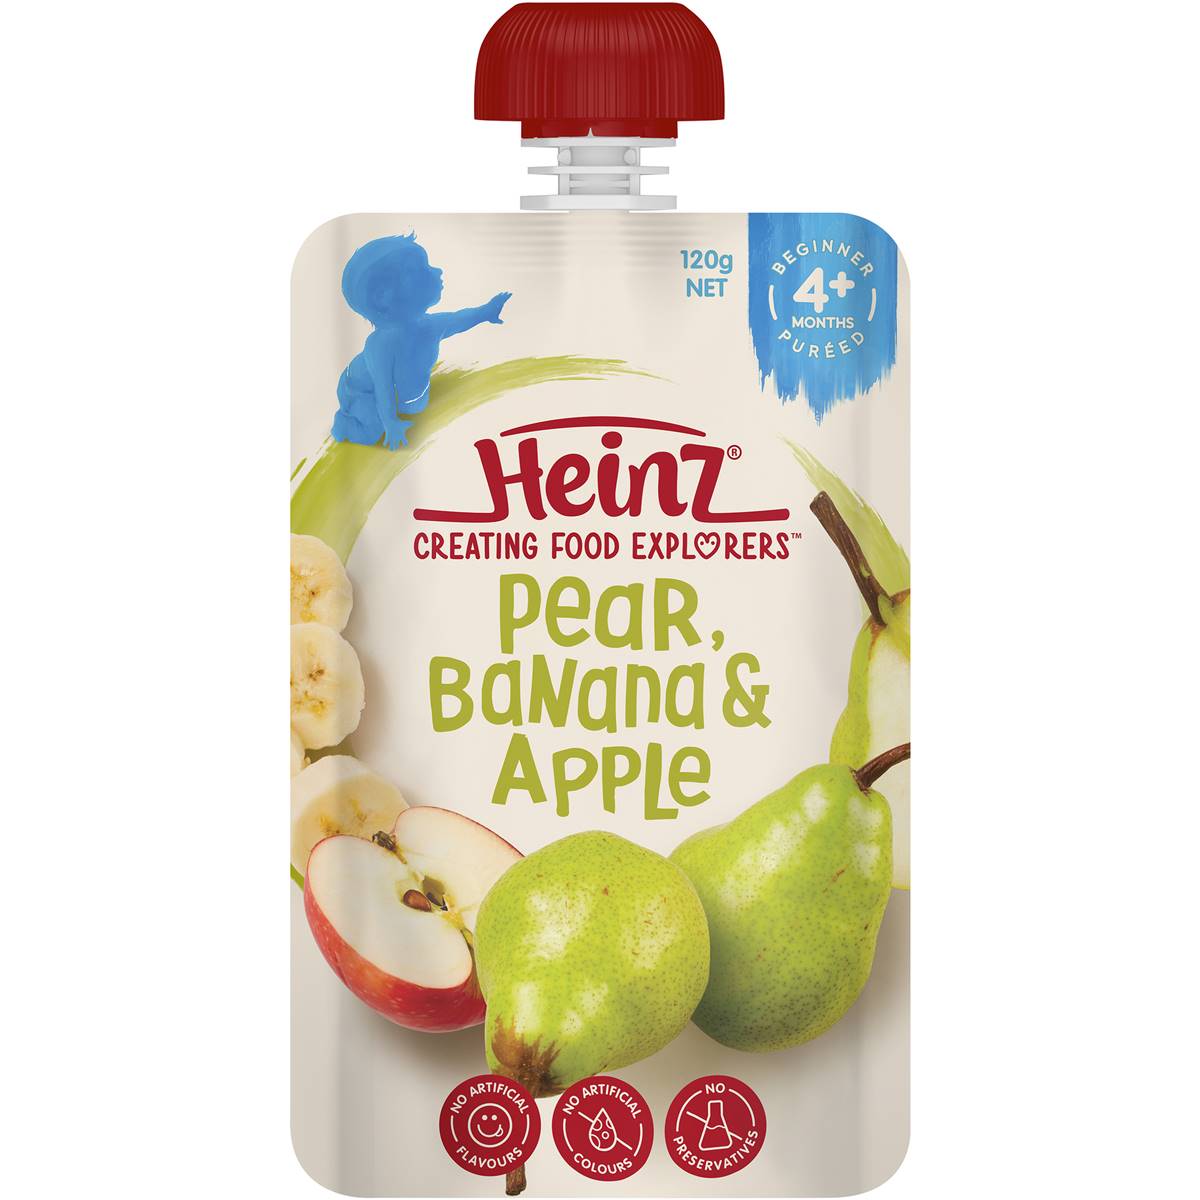 Heinz Simply Apple Peach & Mango 120g Banana + Mango - DoctorOnCall Farmasi Online